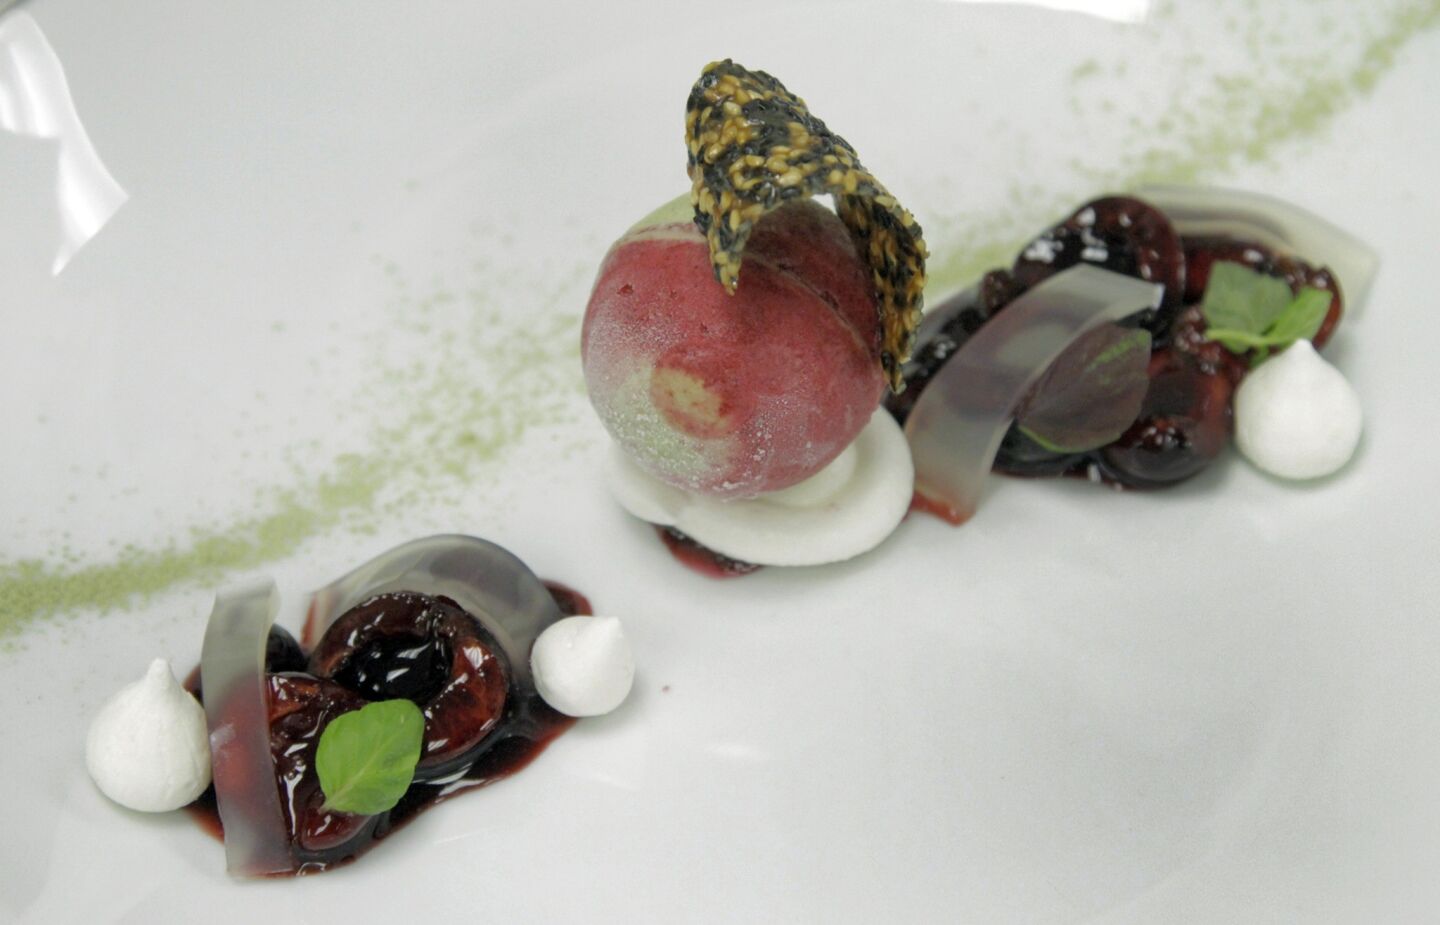 For dessert, Bing cherry sorbet, Matcha green tea ice cream, yuzu meringue and a black sesame crisp by Wolfgang Puck.